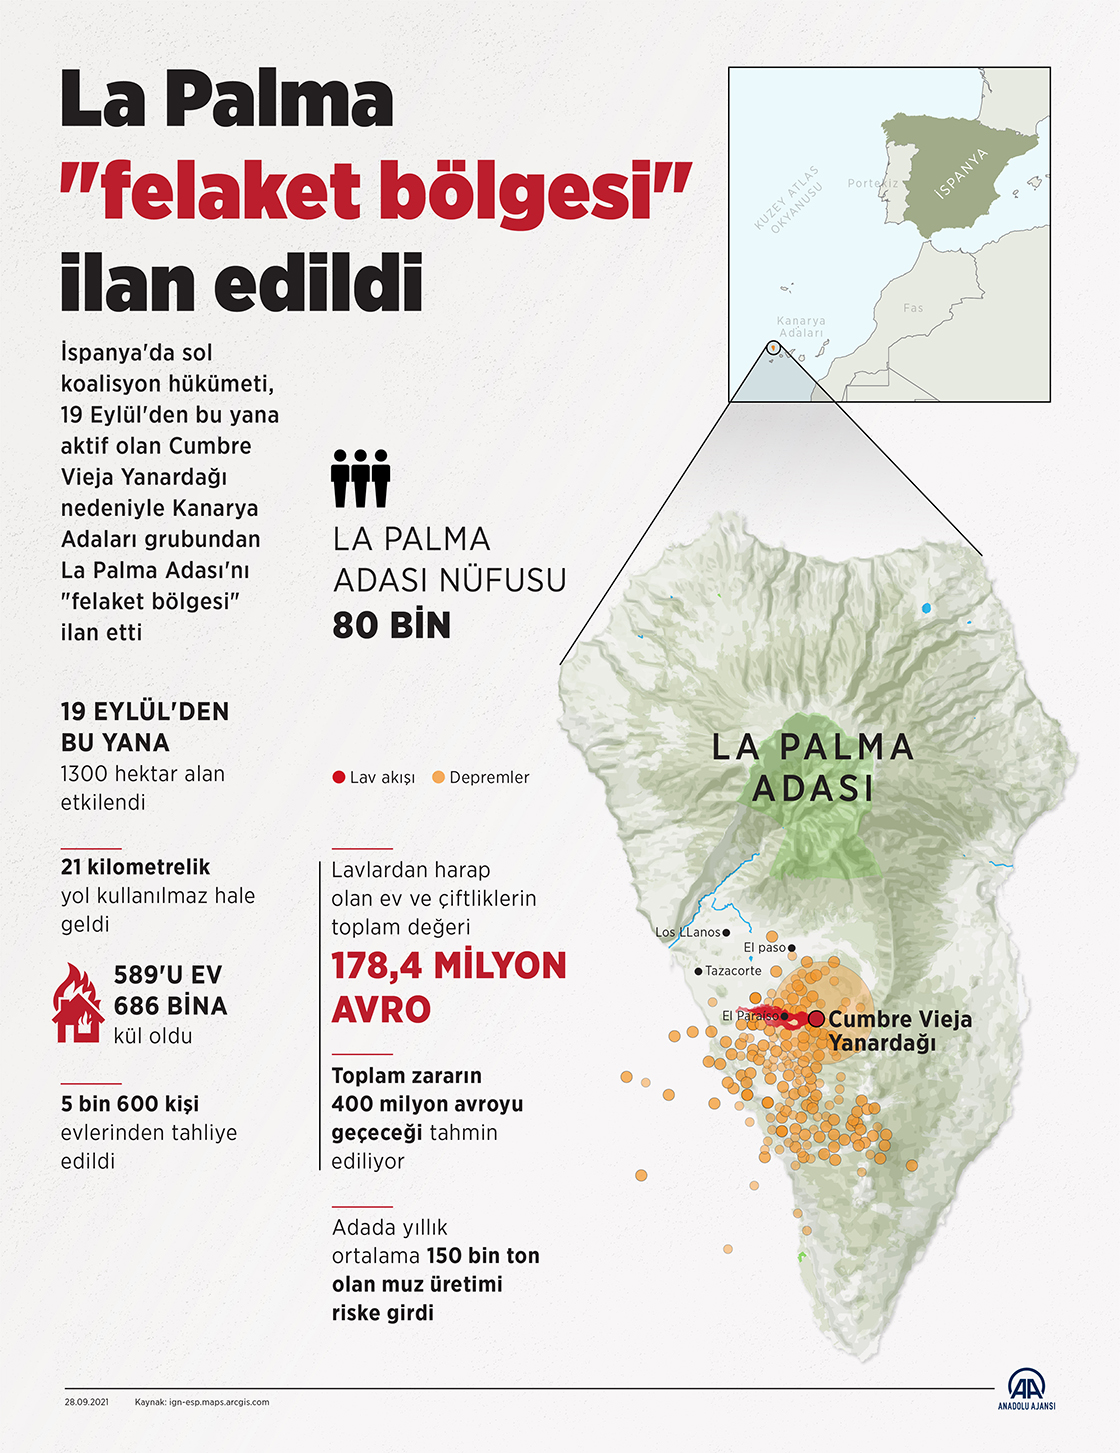 La Palma "felaket bölgesi" ilan edildi